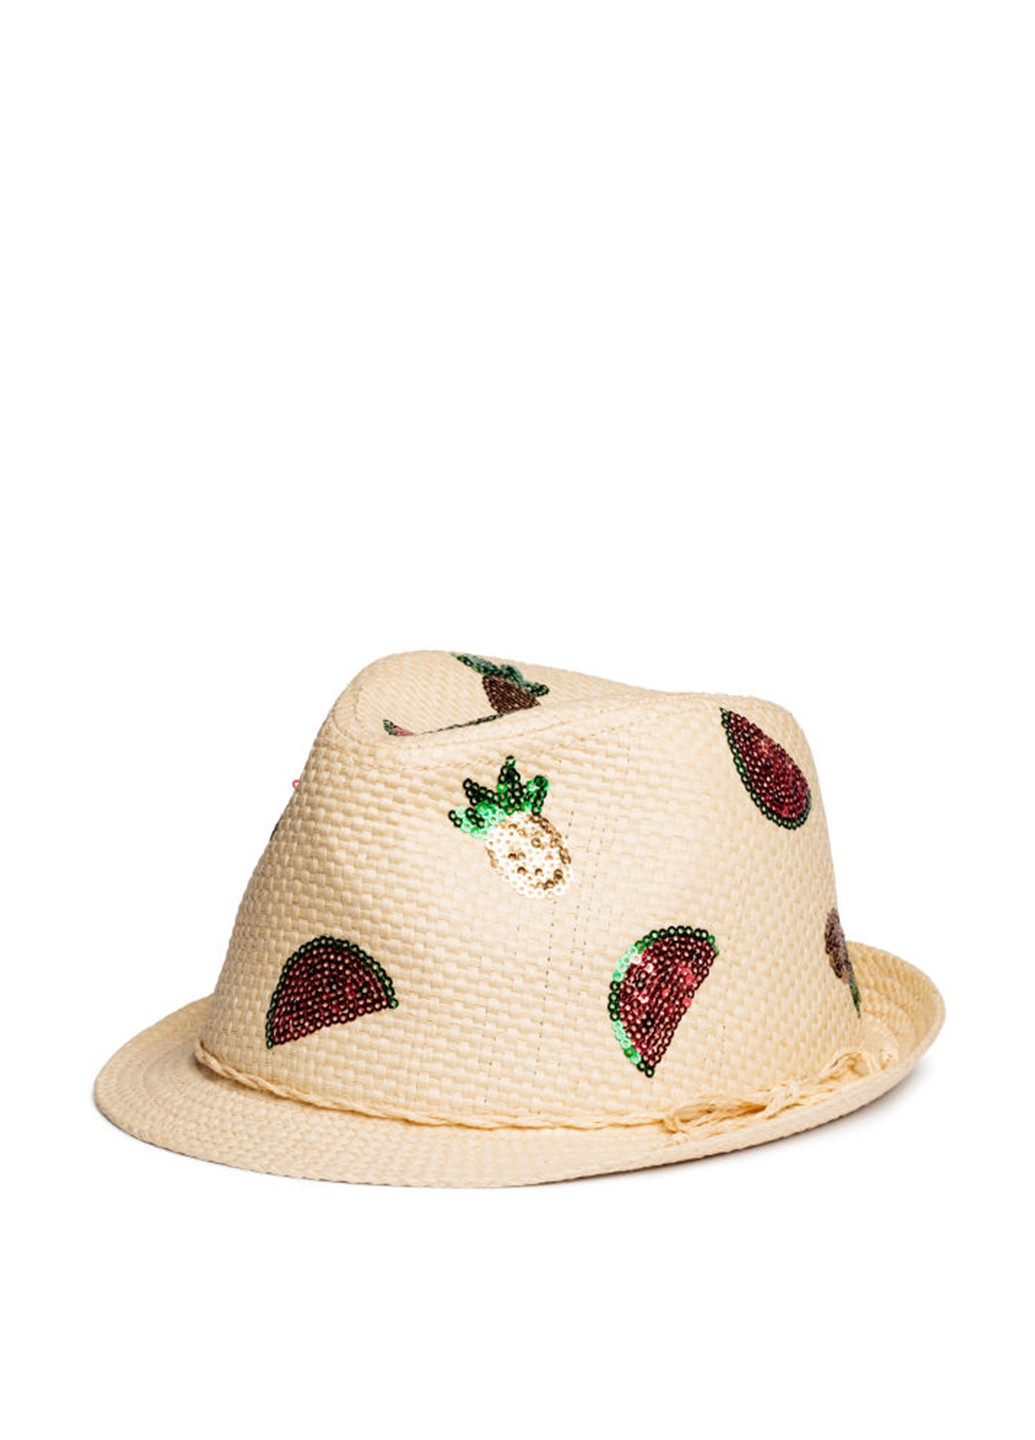 Шляпа H&M рисунок бежевая кэжуал солома